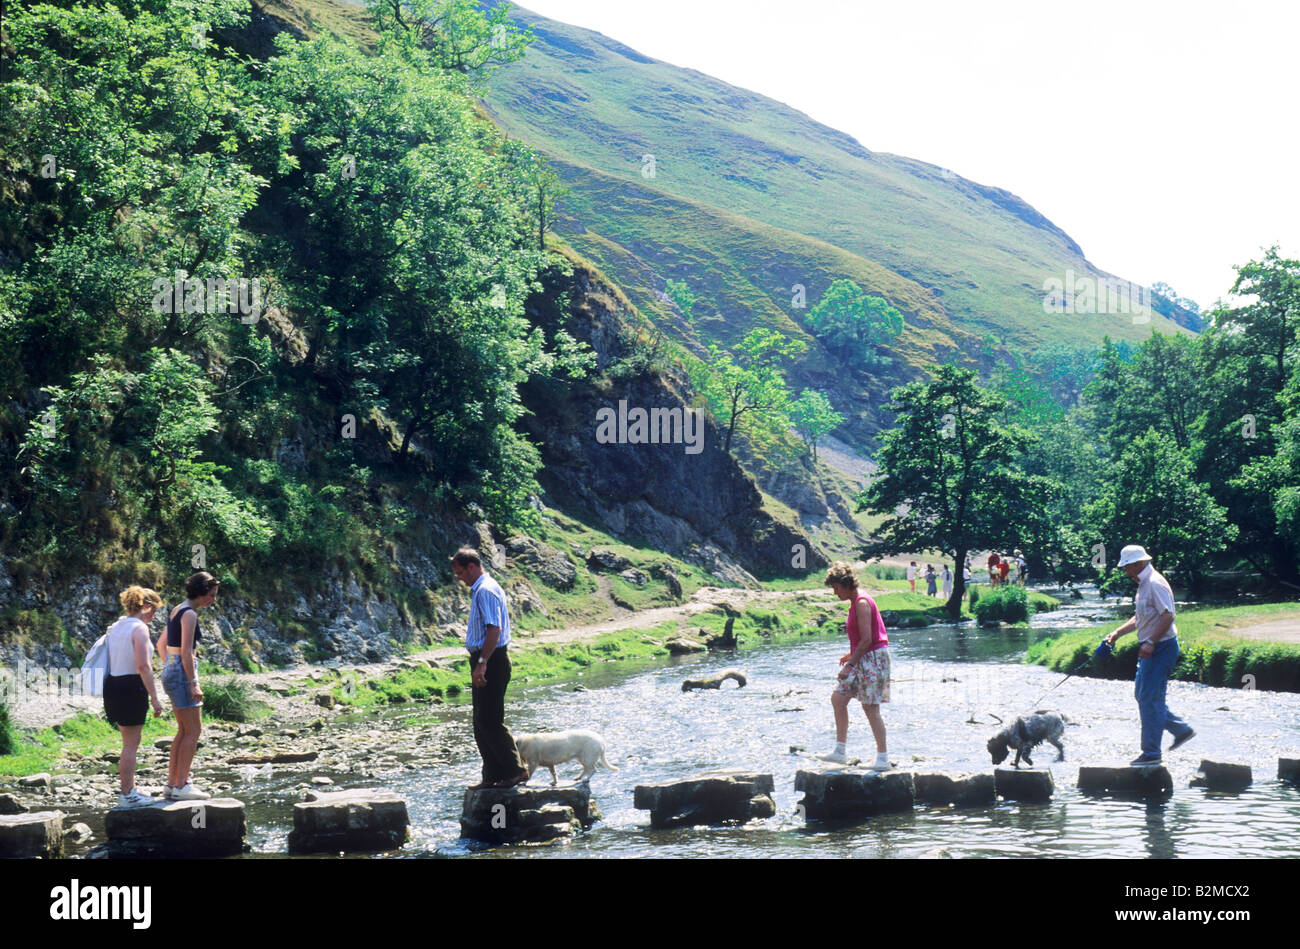 Les gens Stepping Stones Dovedale Derbyshire Dales chiens rivière Dove England UK English valley paysage paysage Banque D'Images